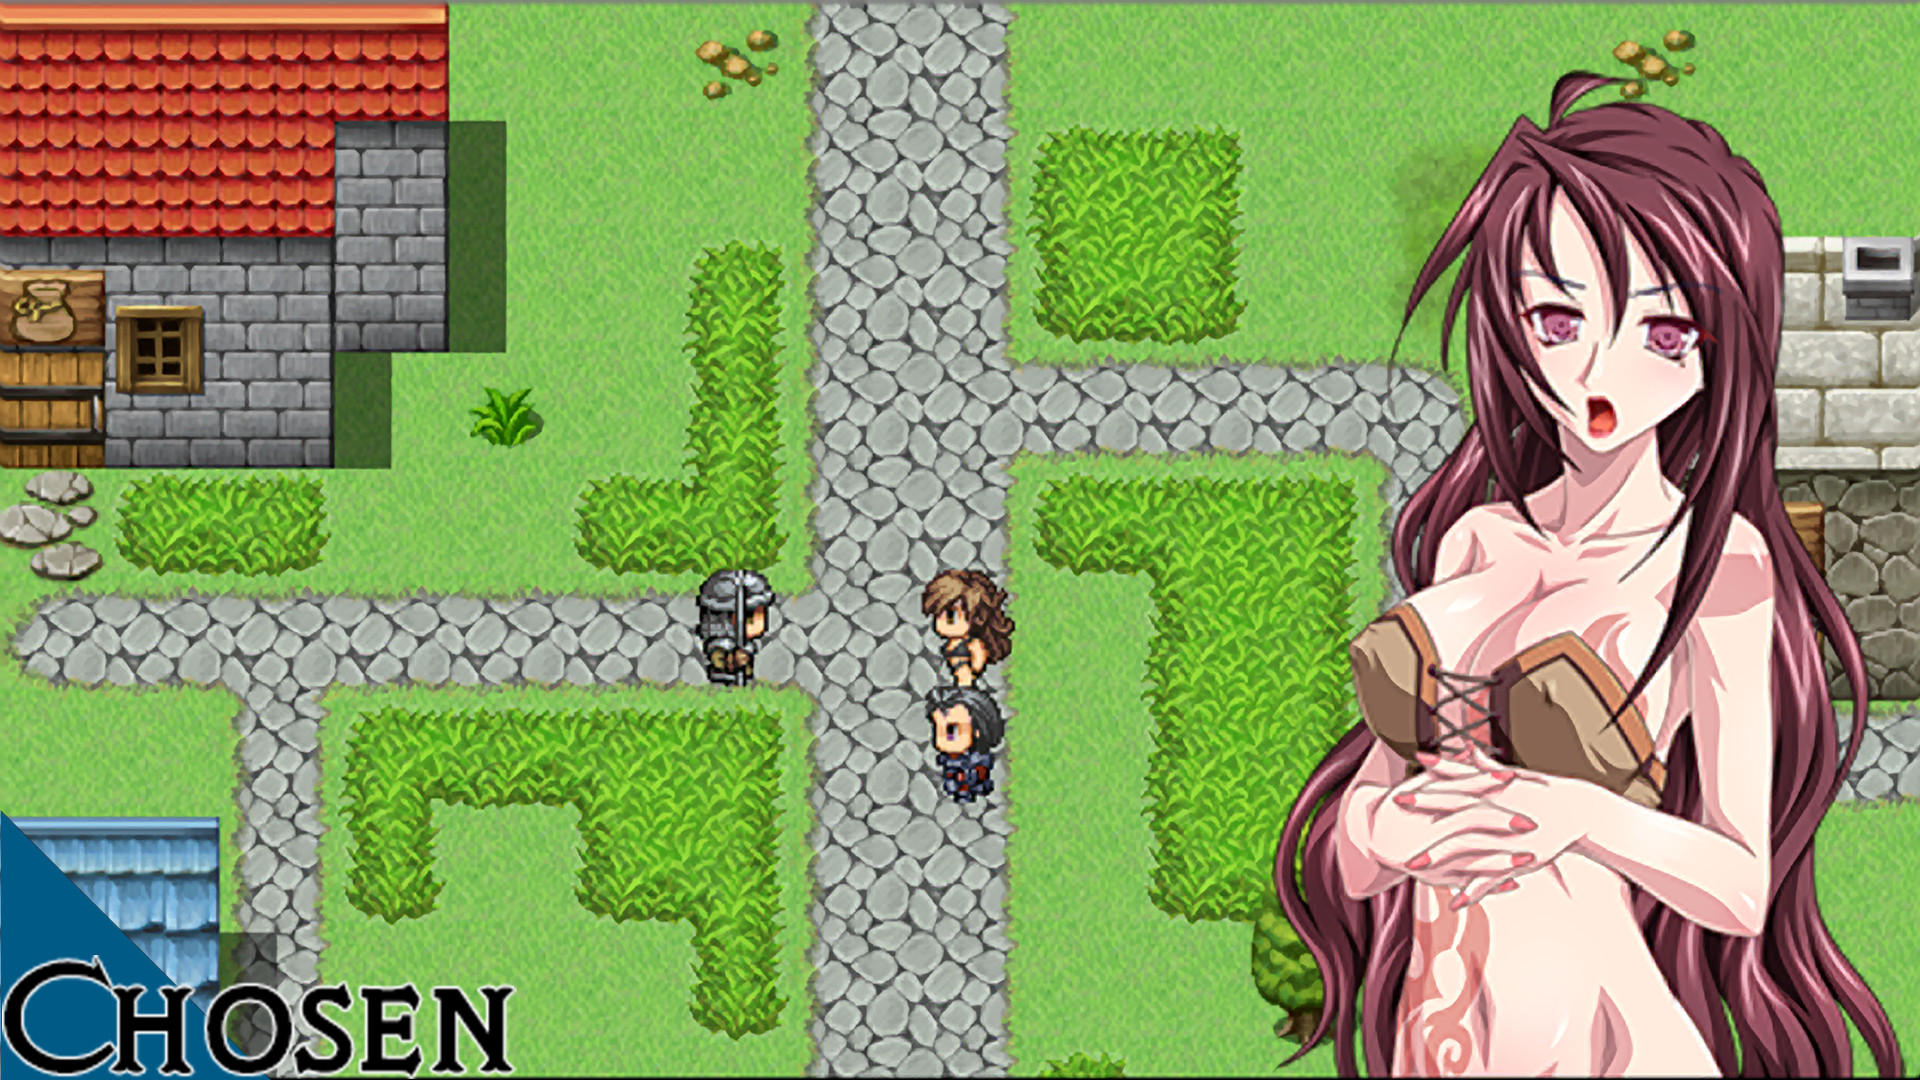 The Chosen RPG screenshot